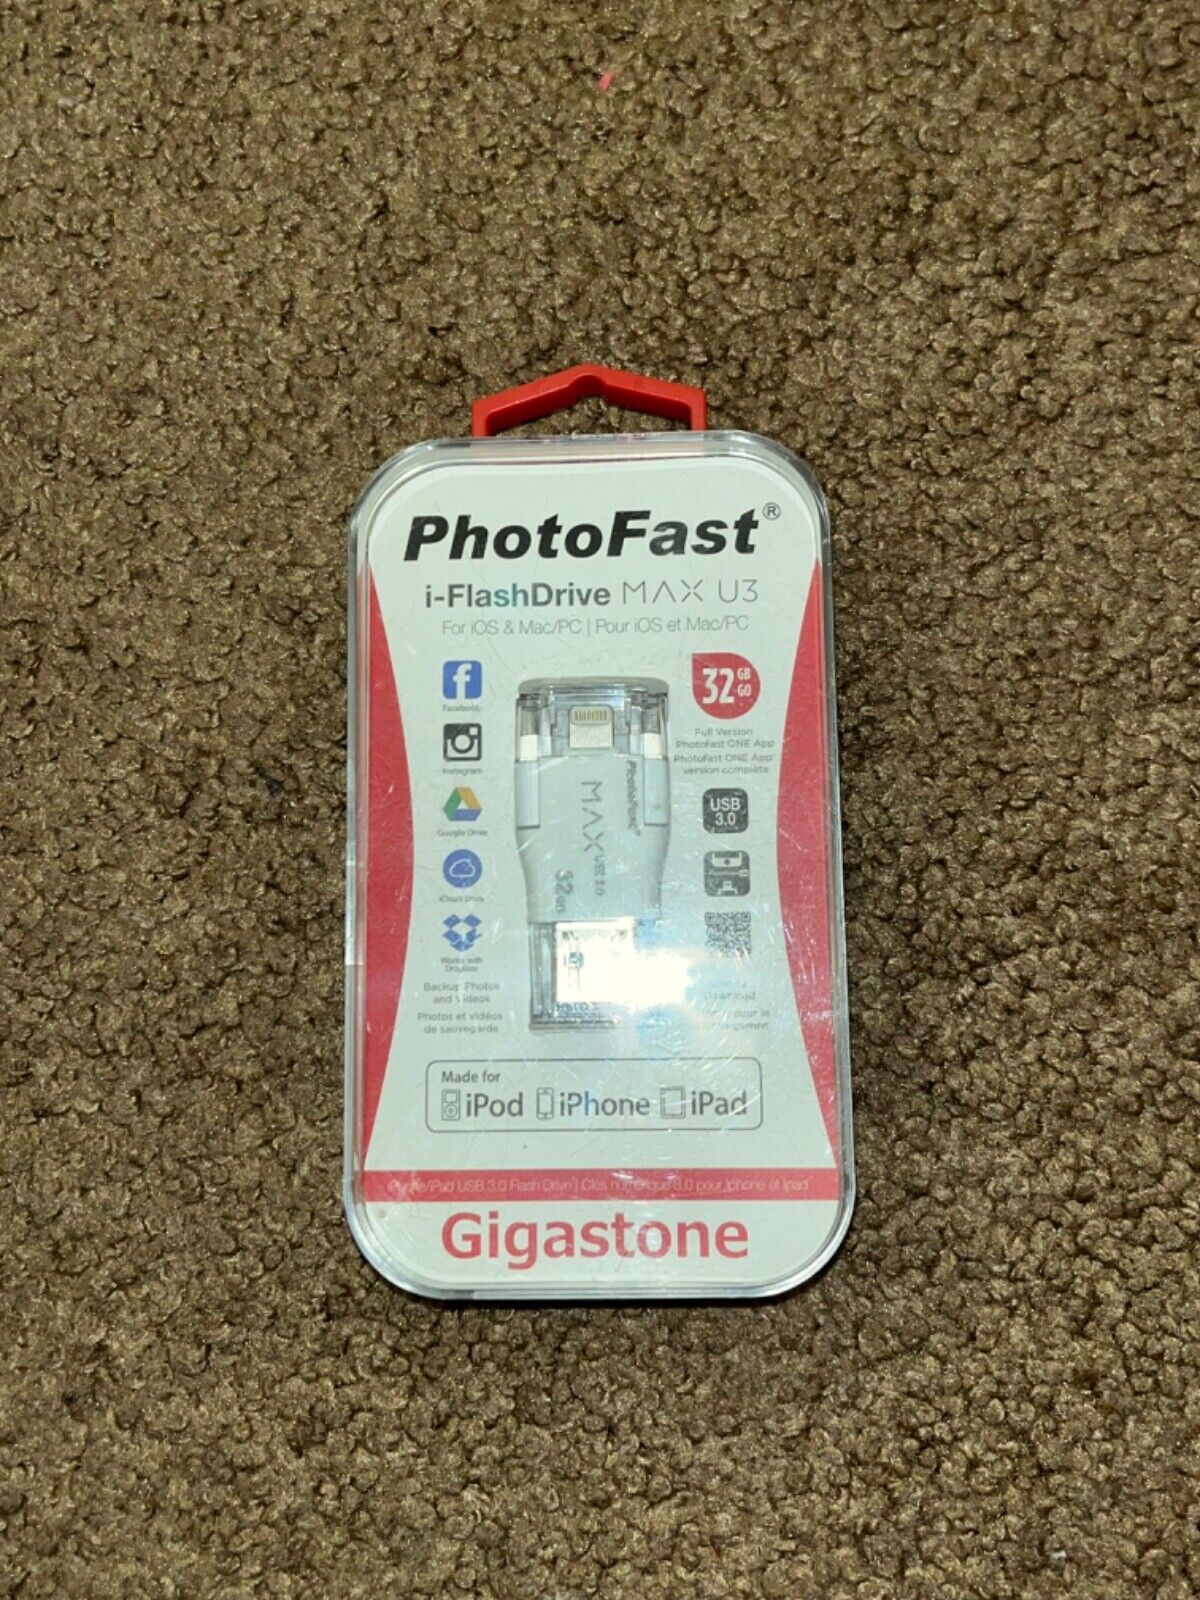 PhotoFast Gigastone USB 3.0 i-FlashDrive MAX U3 for iOS - White 32GB